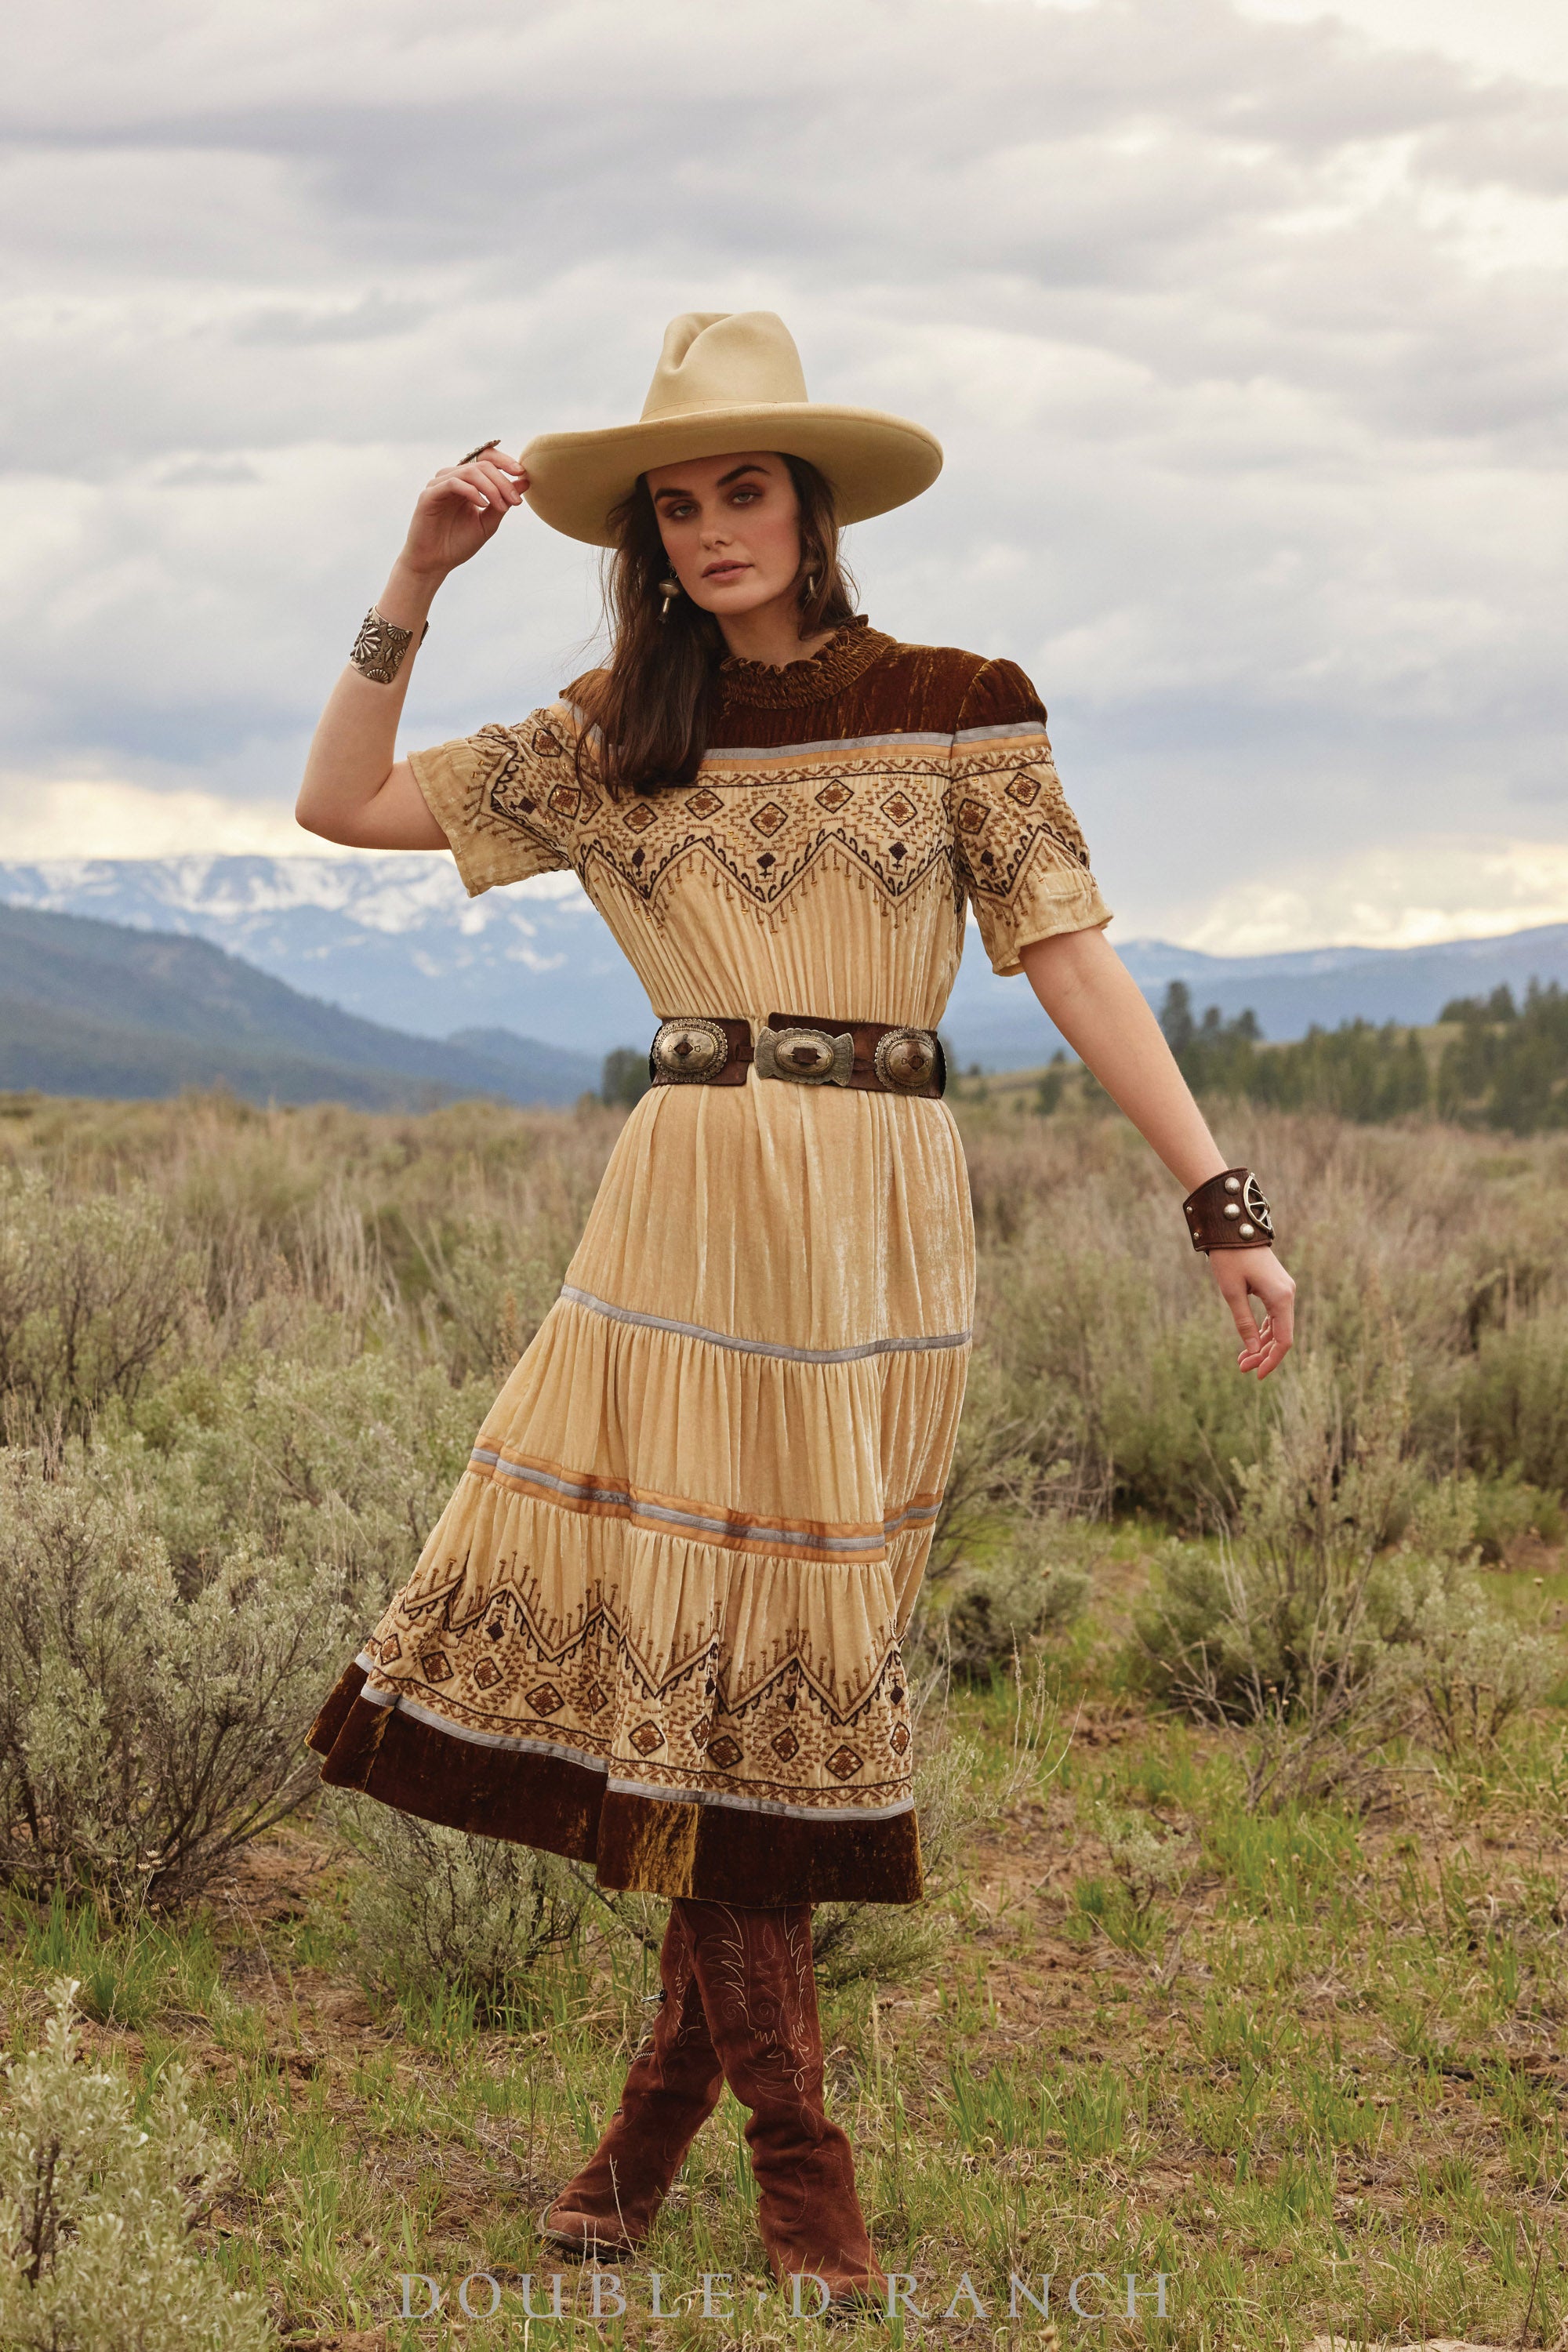 Double D Ranch - Santa Fe Dress – Snagged & Bagged